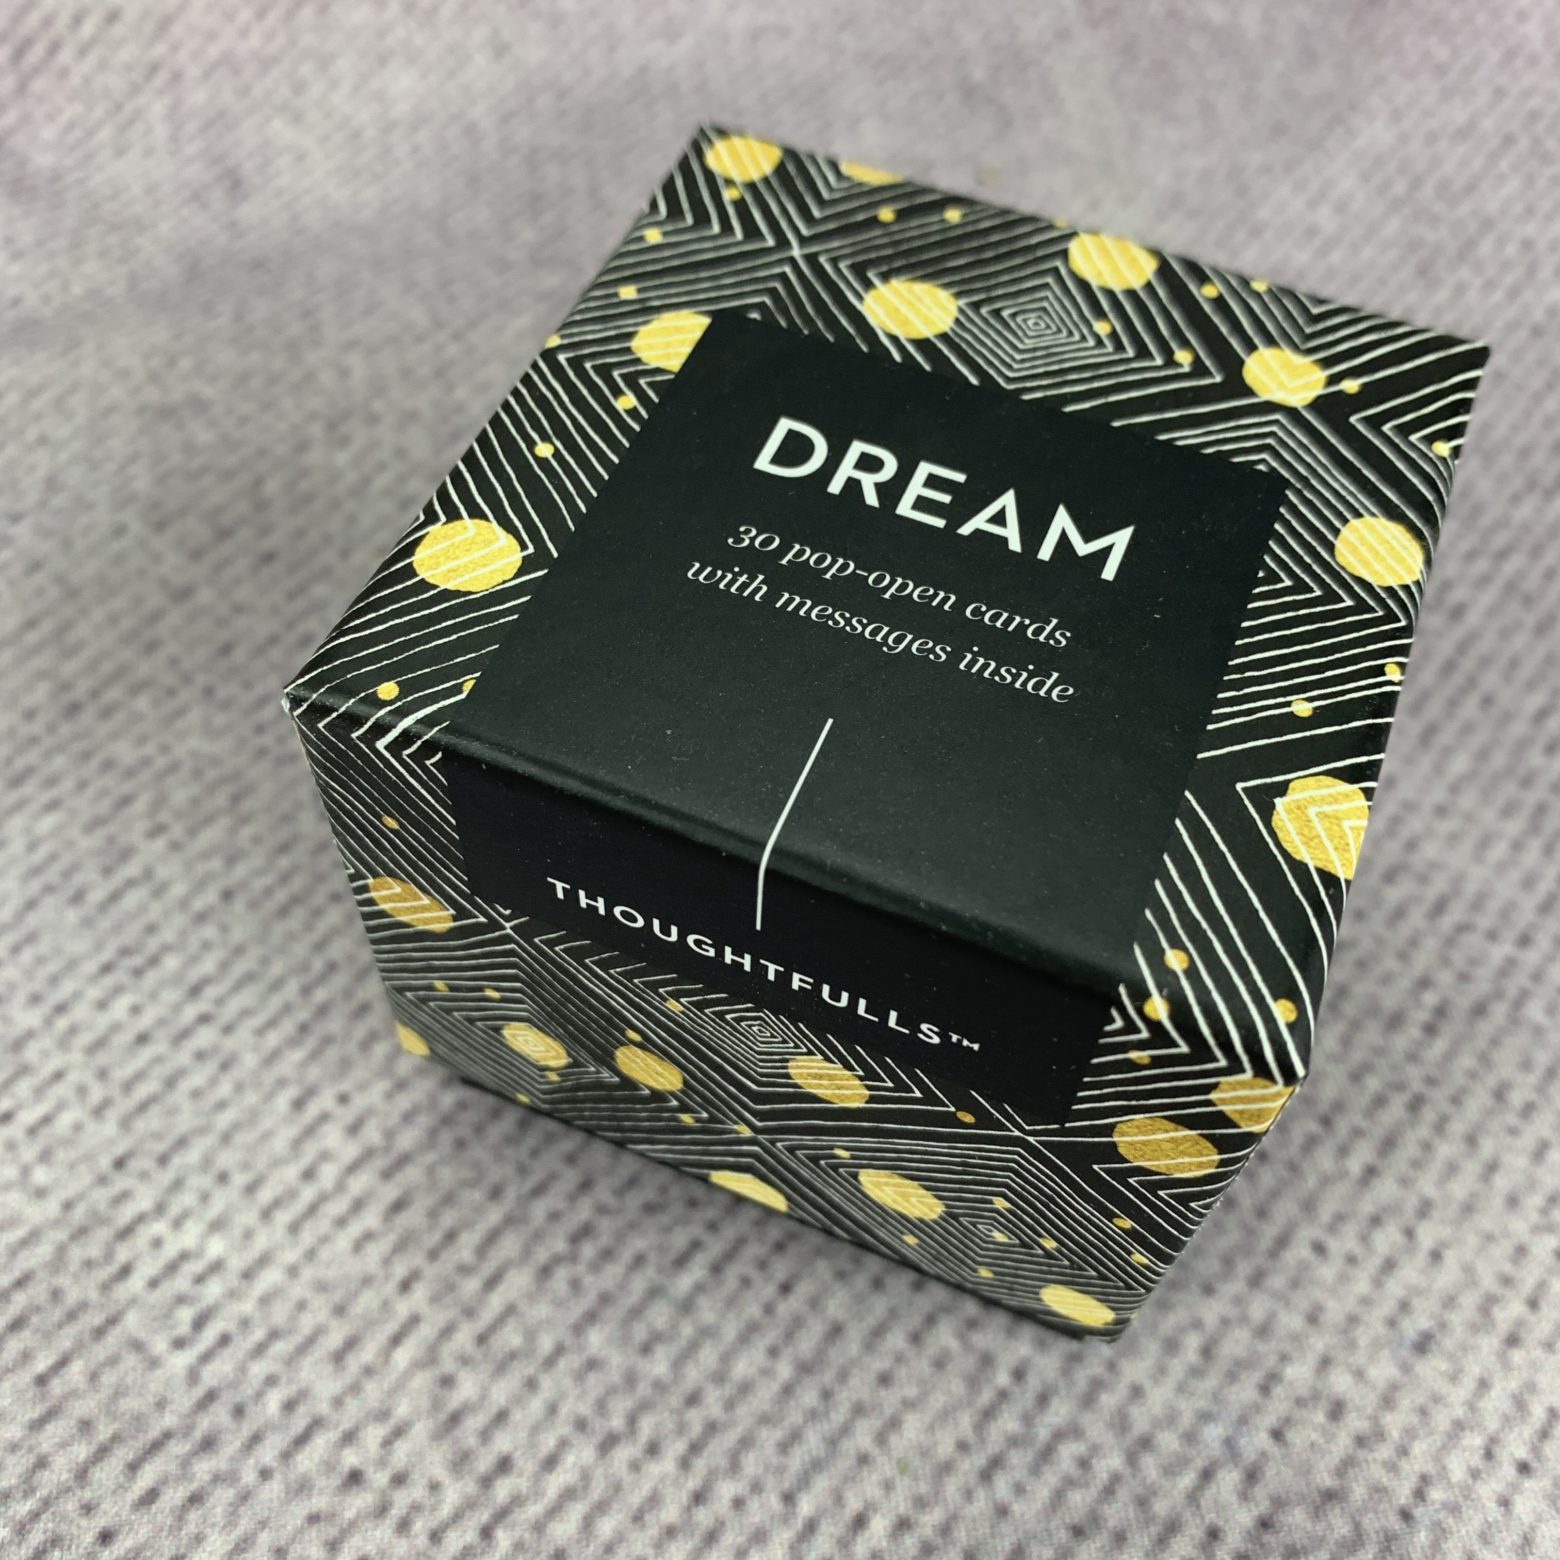 Dream - Thoughtfulls Box of Pop Open Cards